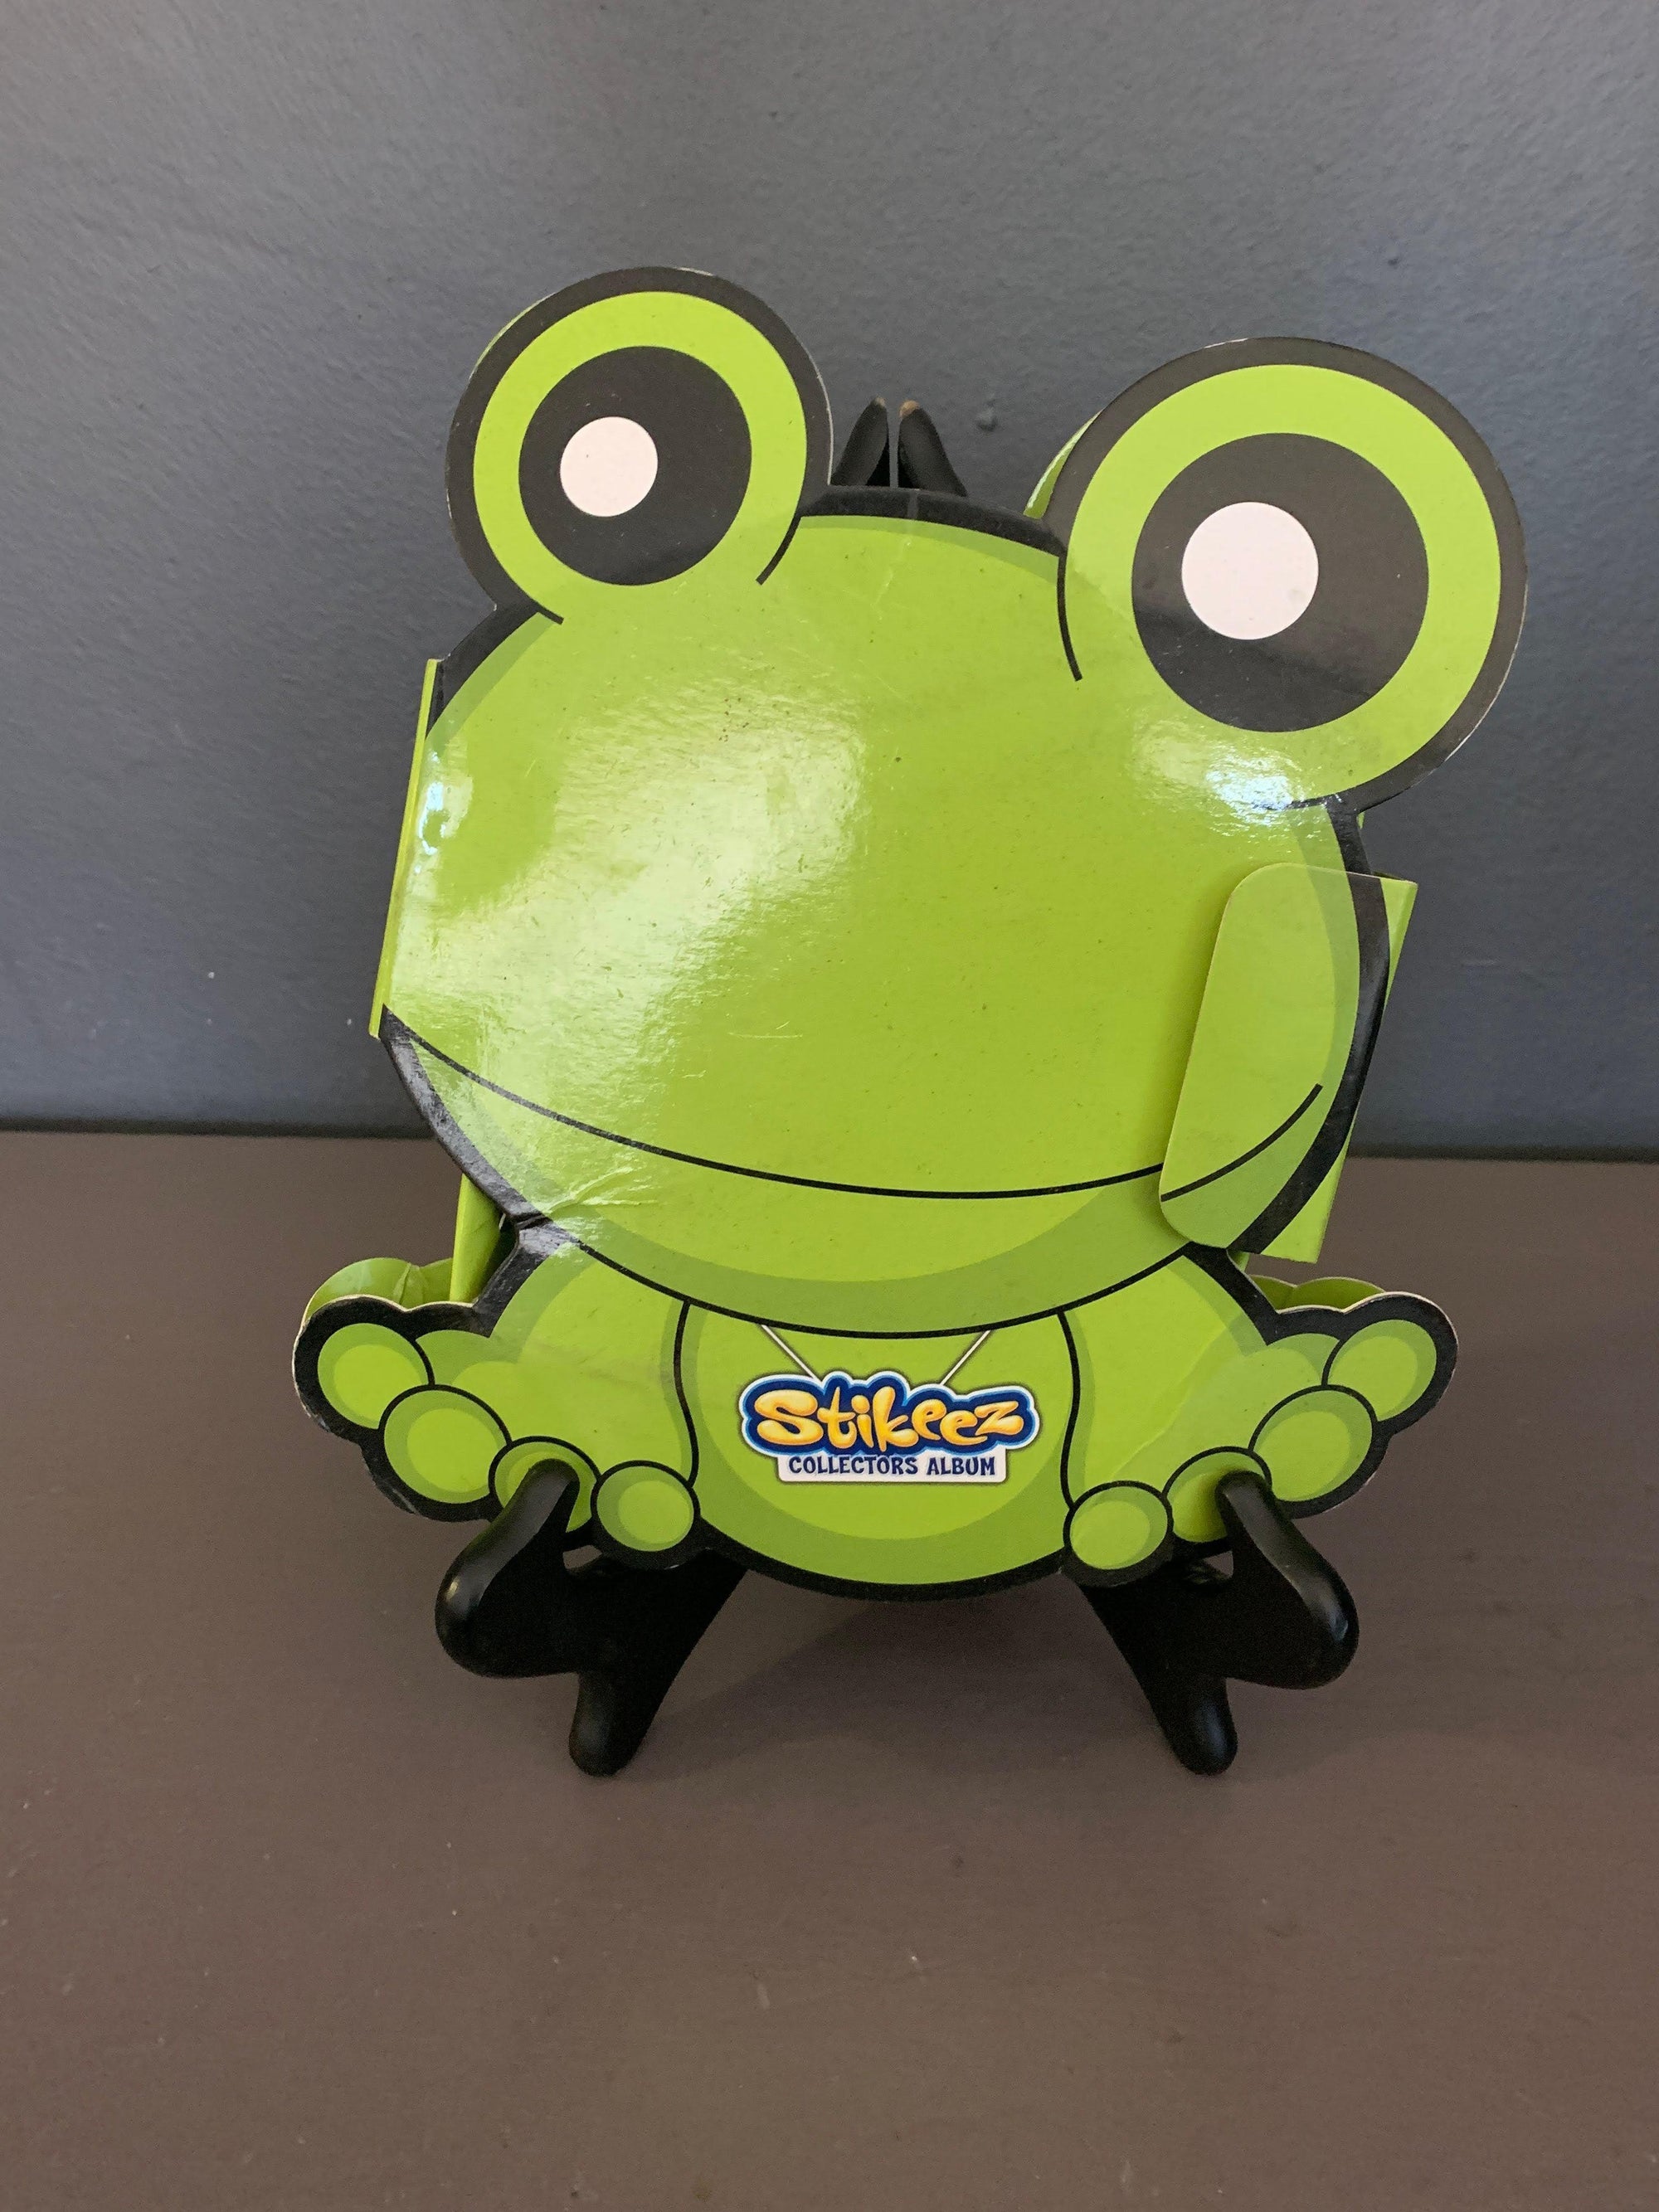 Stickeys Frog - 2ndhandwarehouse.com